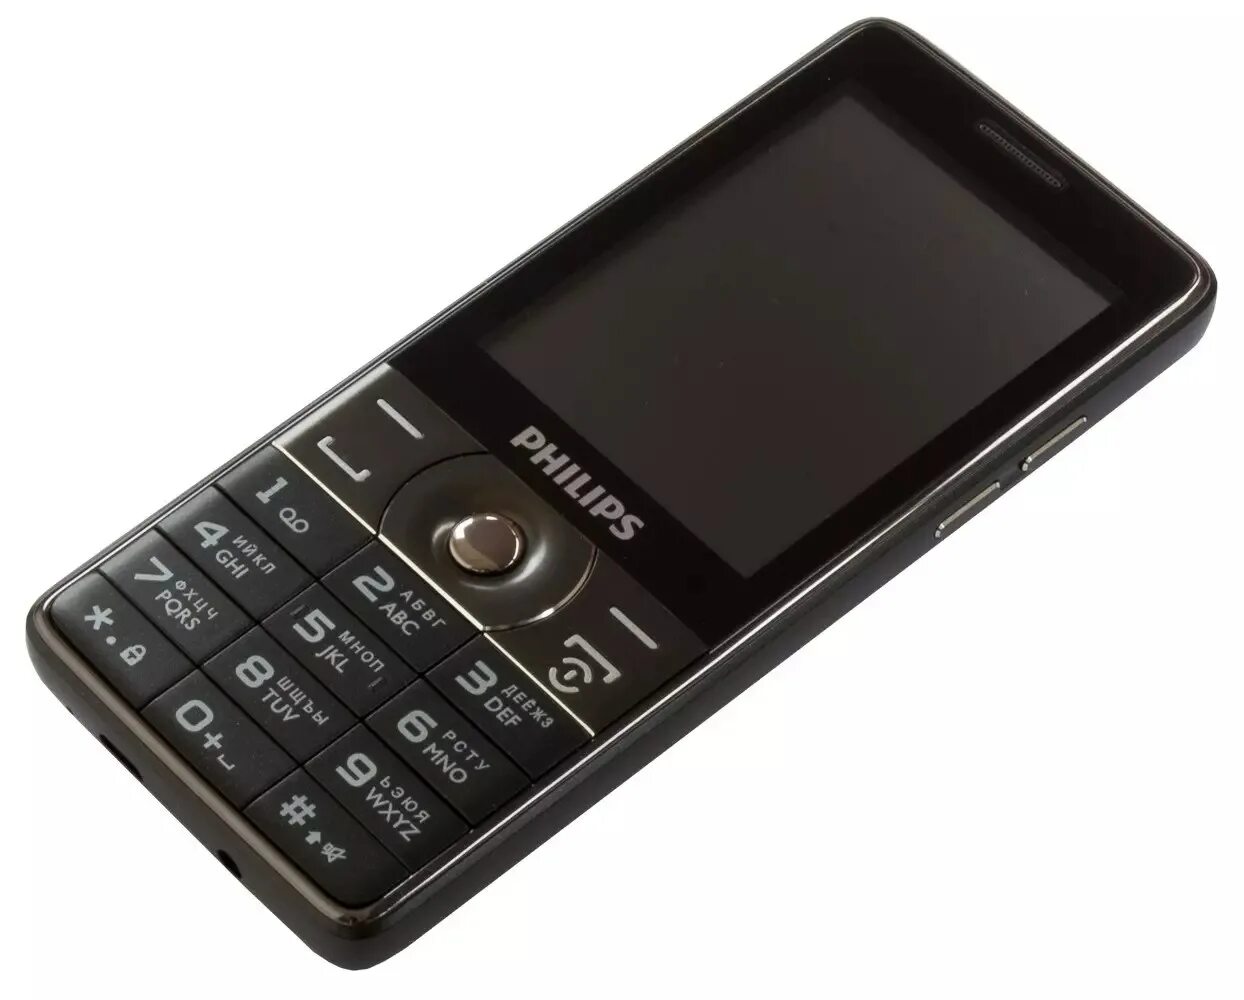 Philips Xenium e570. Philips Xenium Philips e570. Philips 570. Кнопочный телефон Philips Xenium e570.